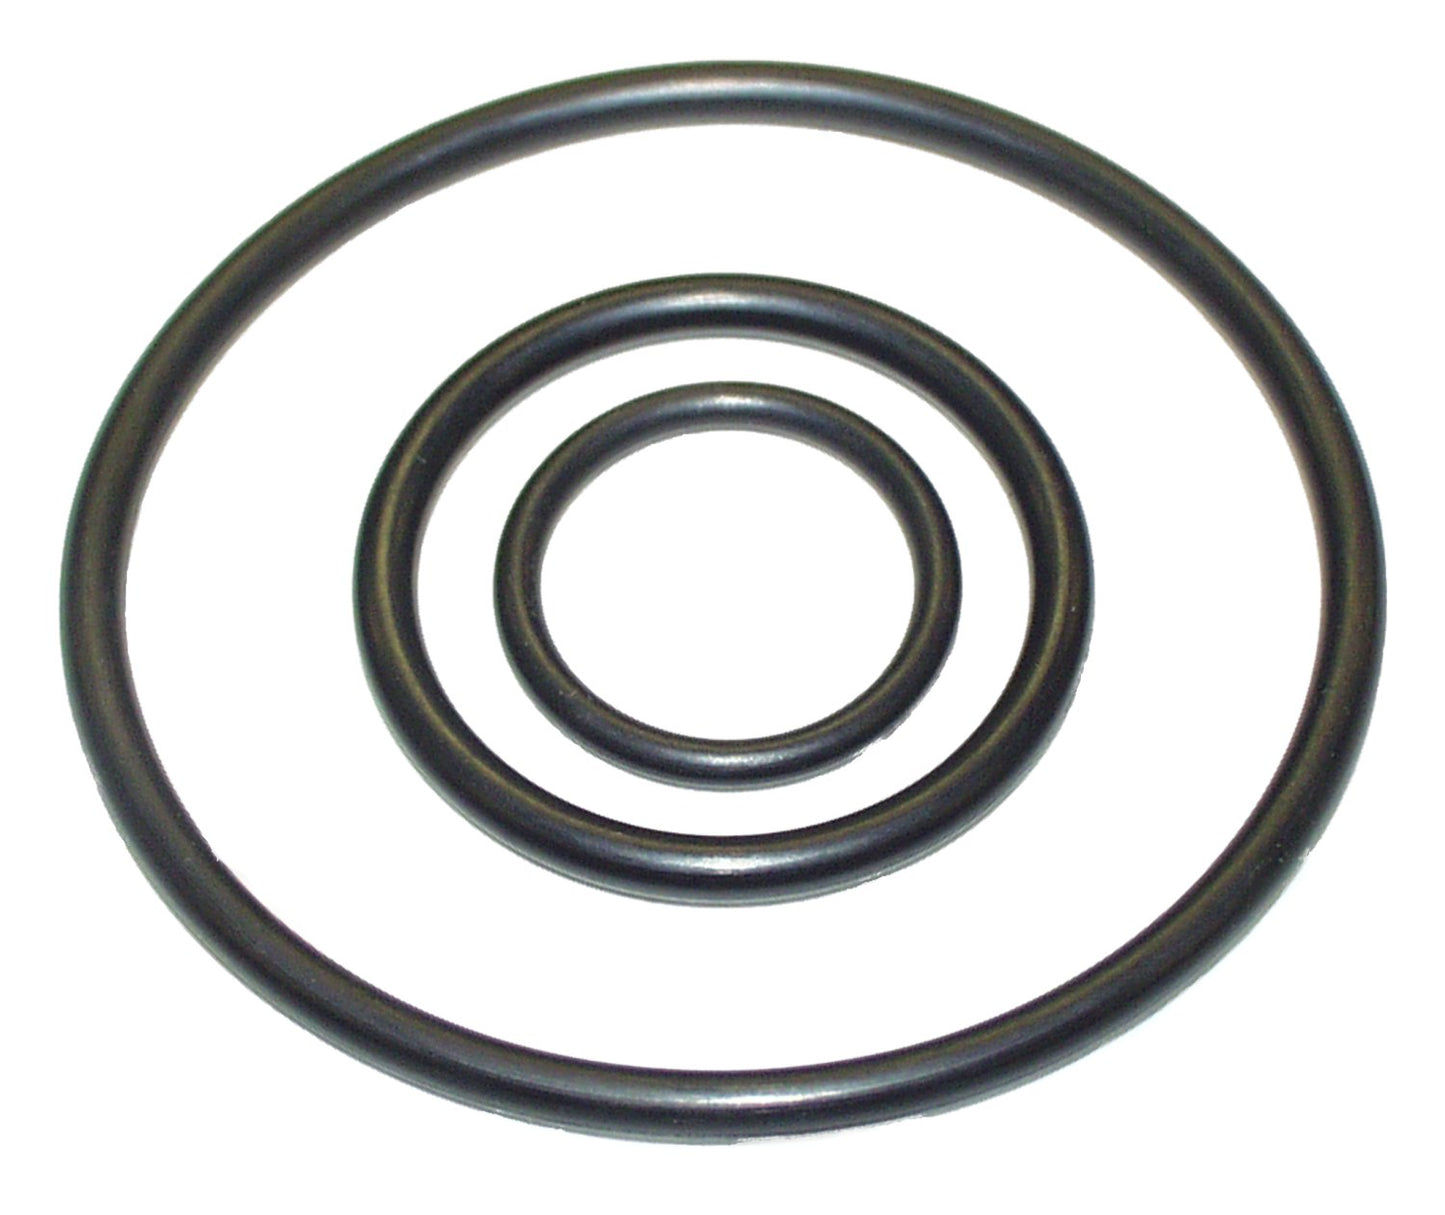 Crown Automotive - Rubber Black Oil Filter Adapter O-Ring Kit - 33002970K